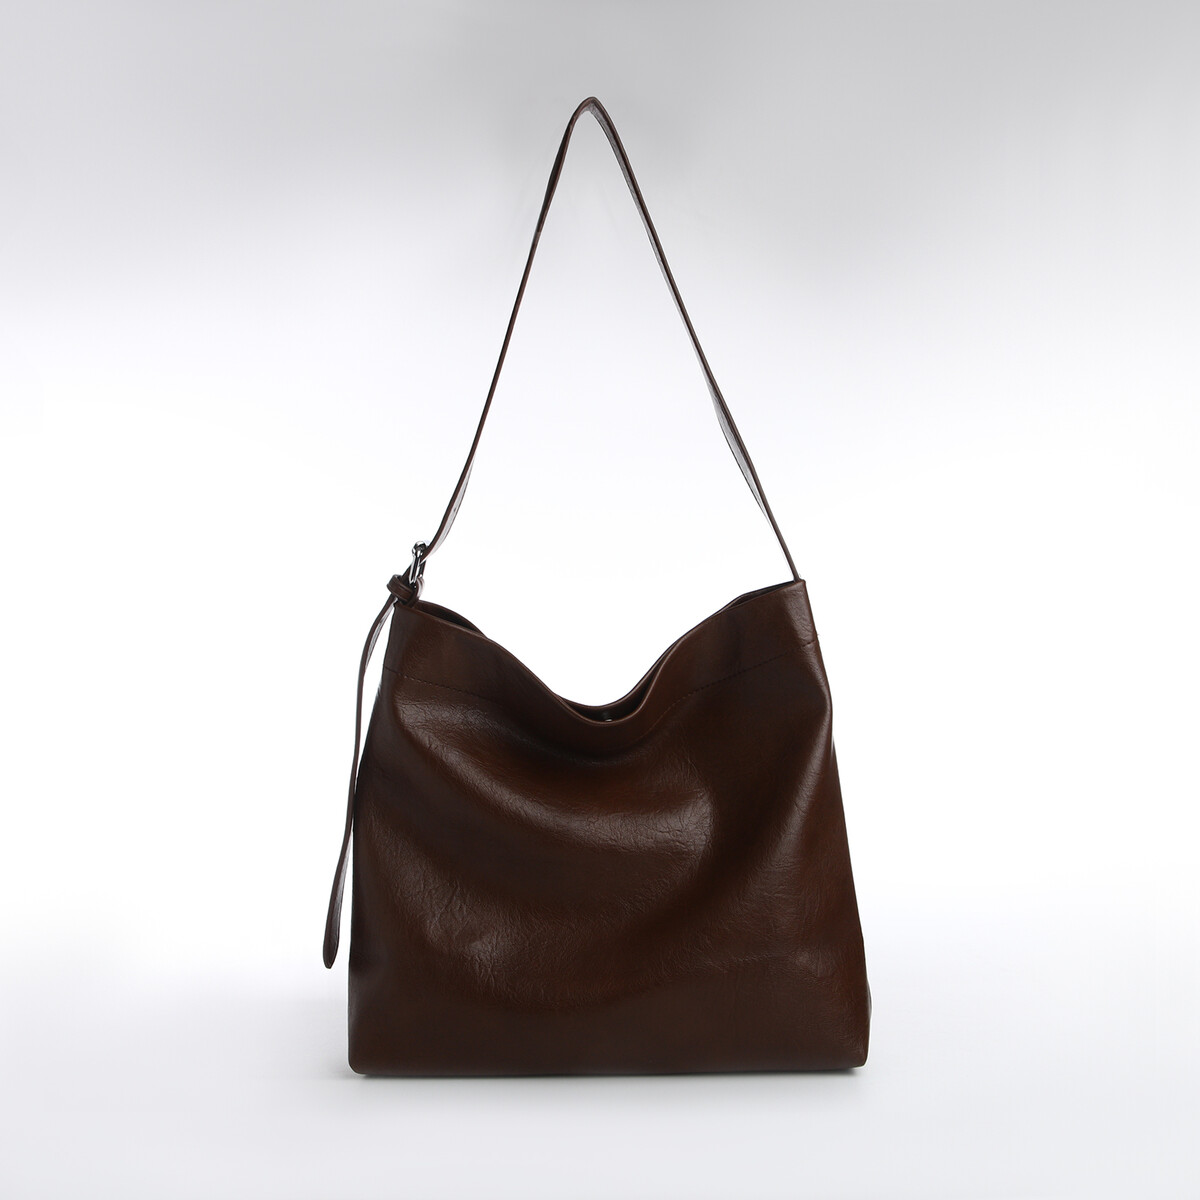 Сумка-мешок женская на магните, косметичка, цвет коричневый сумка женская багет на магните